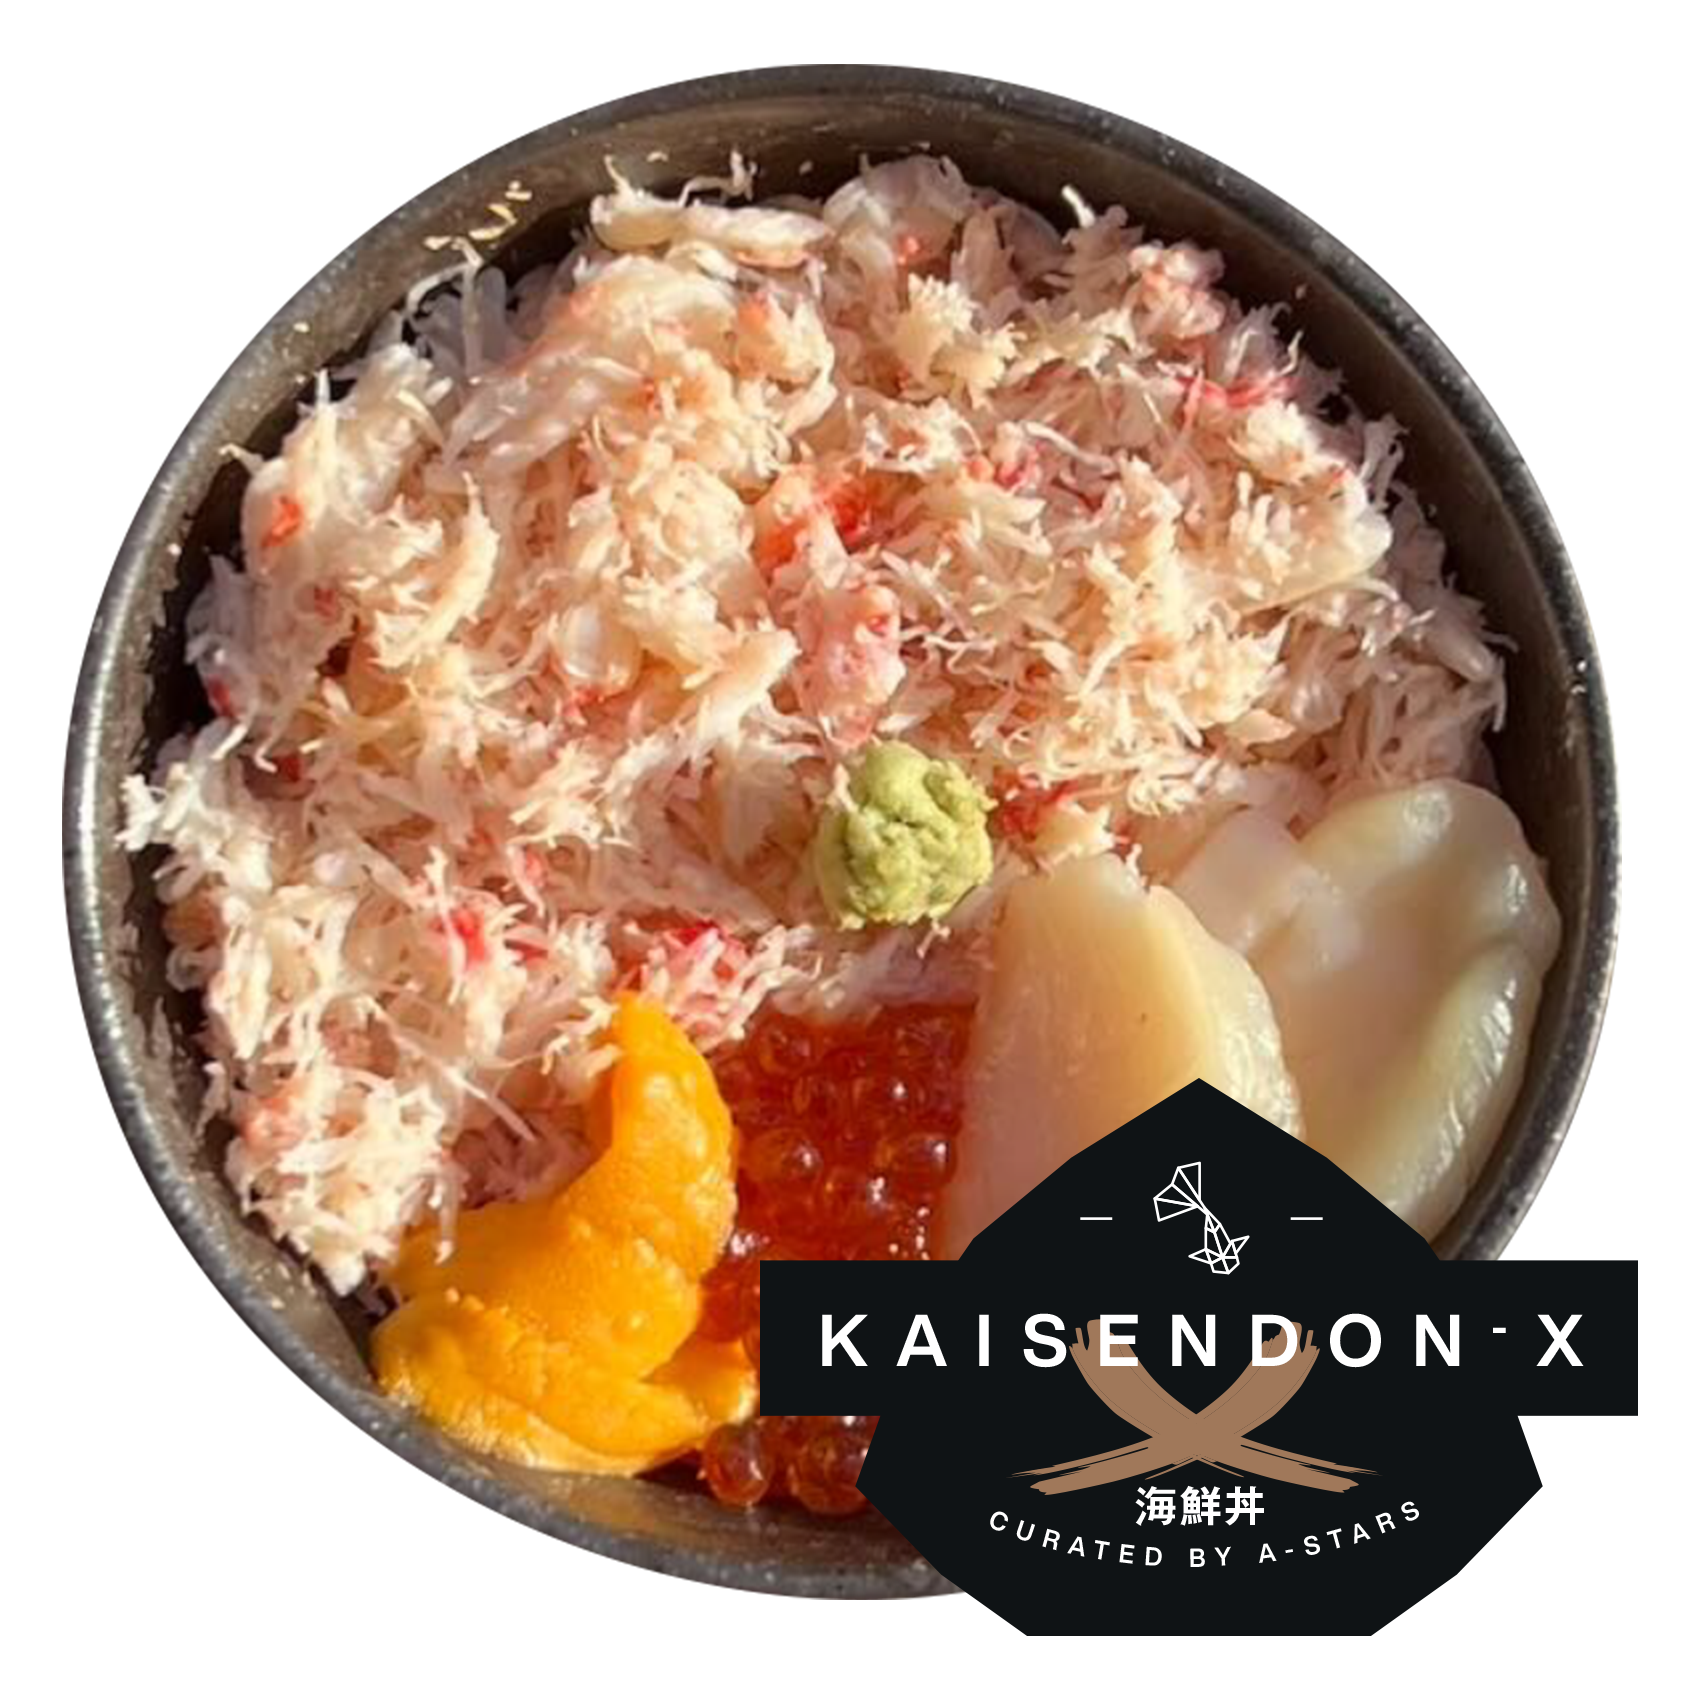 KAISEN-X | 特上贅沢丼 : A+ Supreme Kaisendon